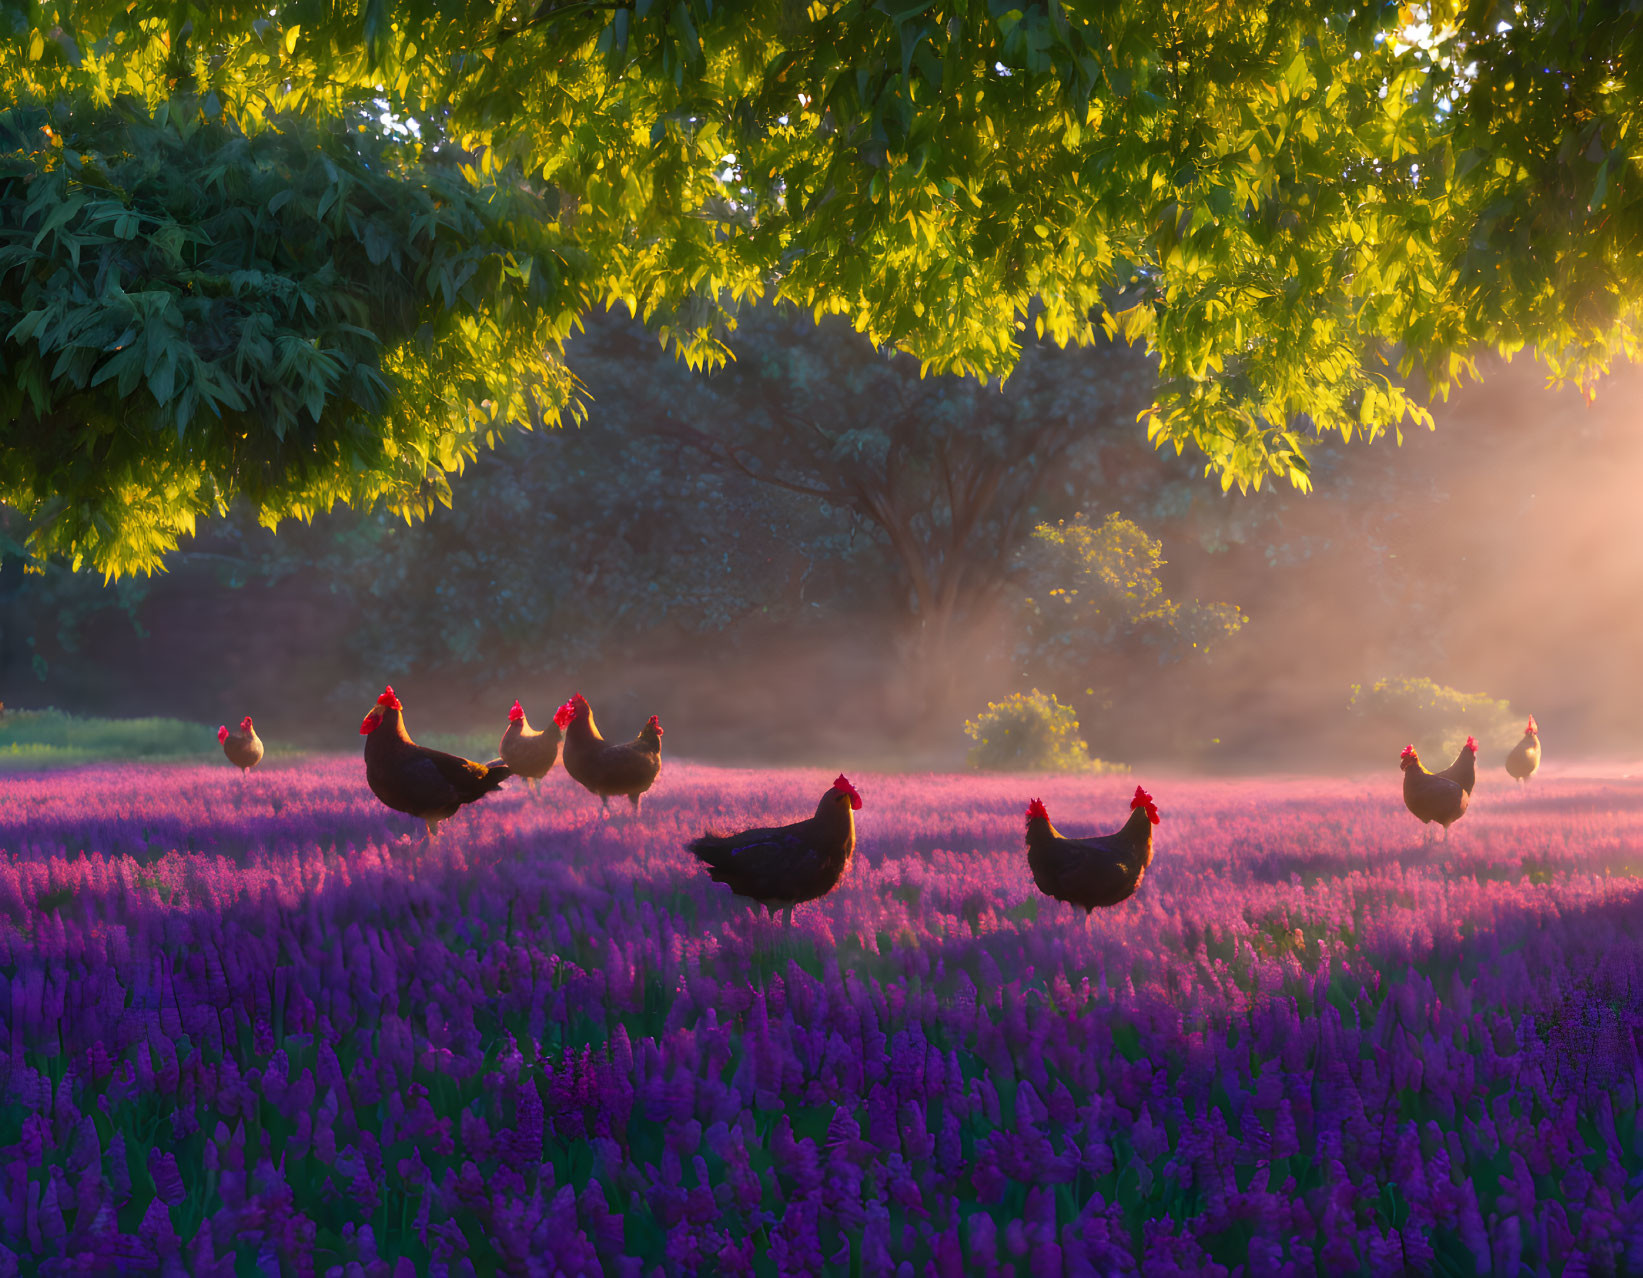 Chickens in Vibrant Purple Lavender Field Under Sunlight